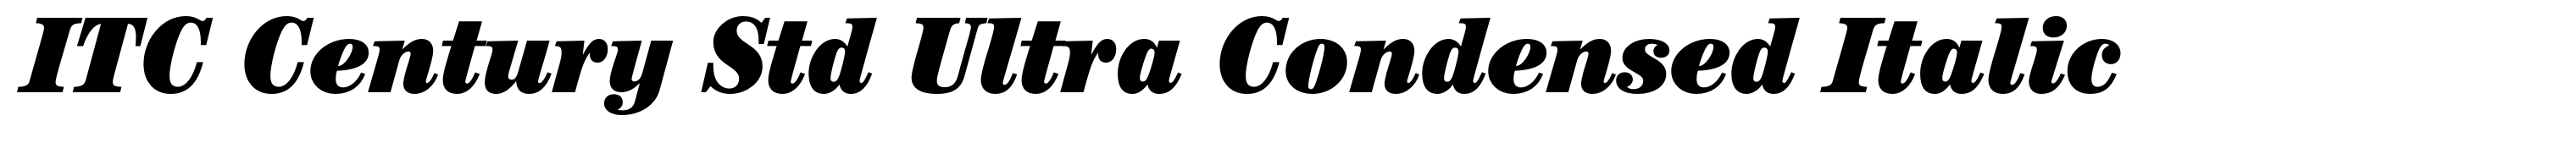 ITC Century Std Ultra Condensed Italic